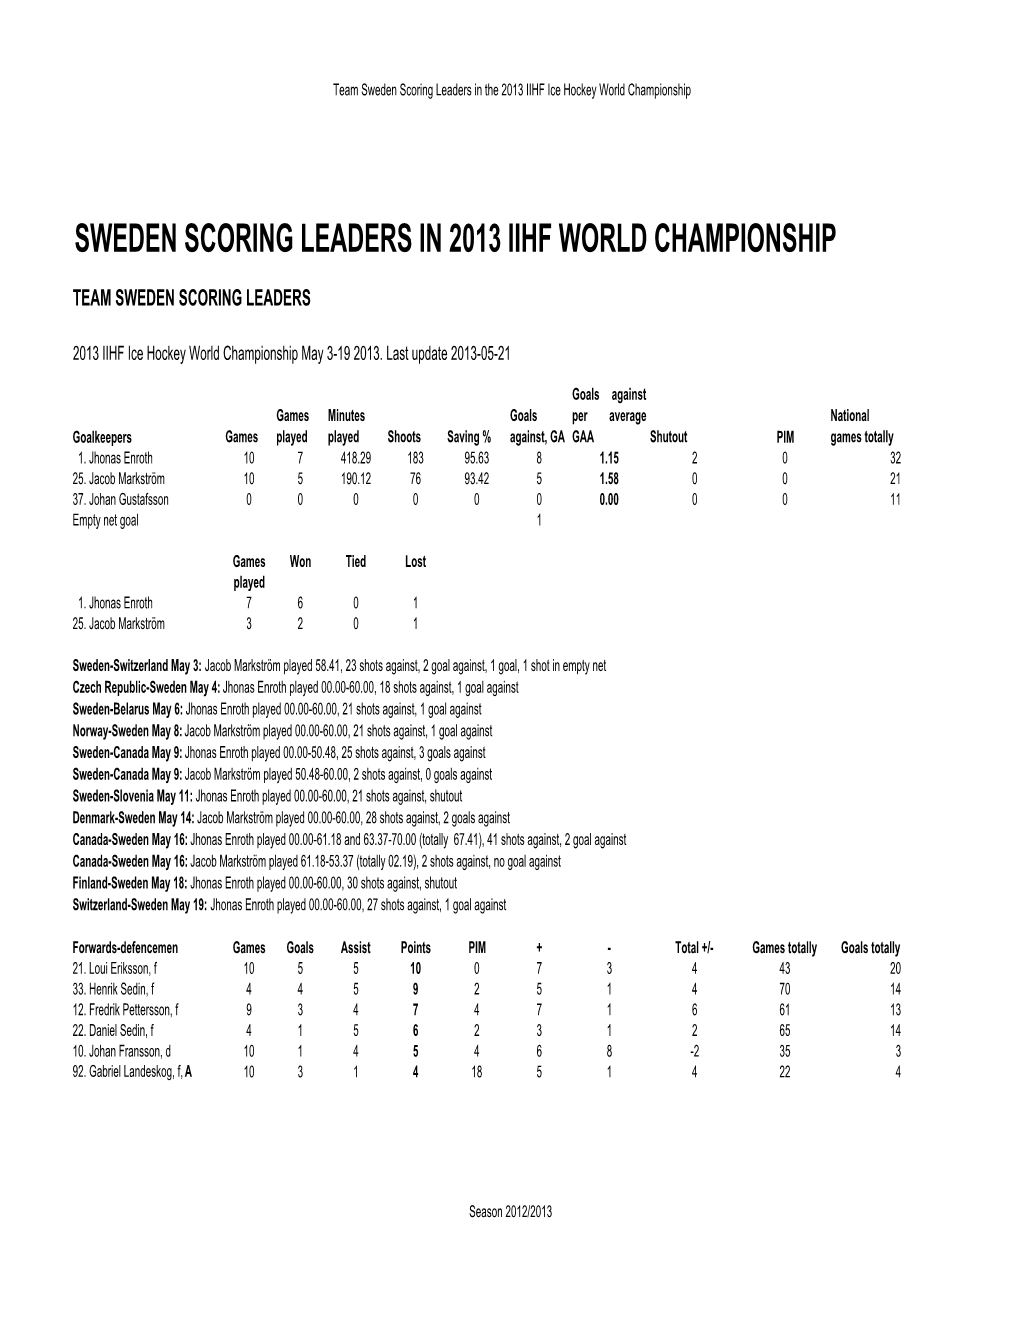 Sweden Scoring Leaders in 2013 Iihf World Championship